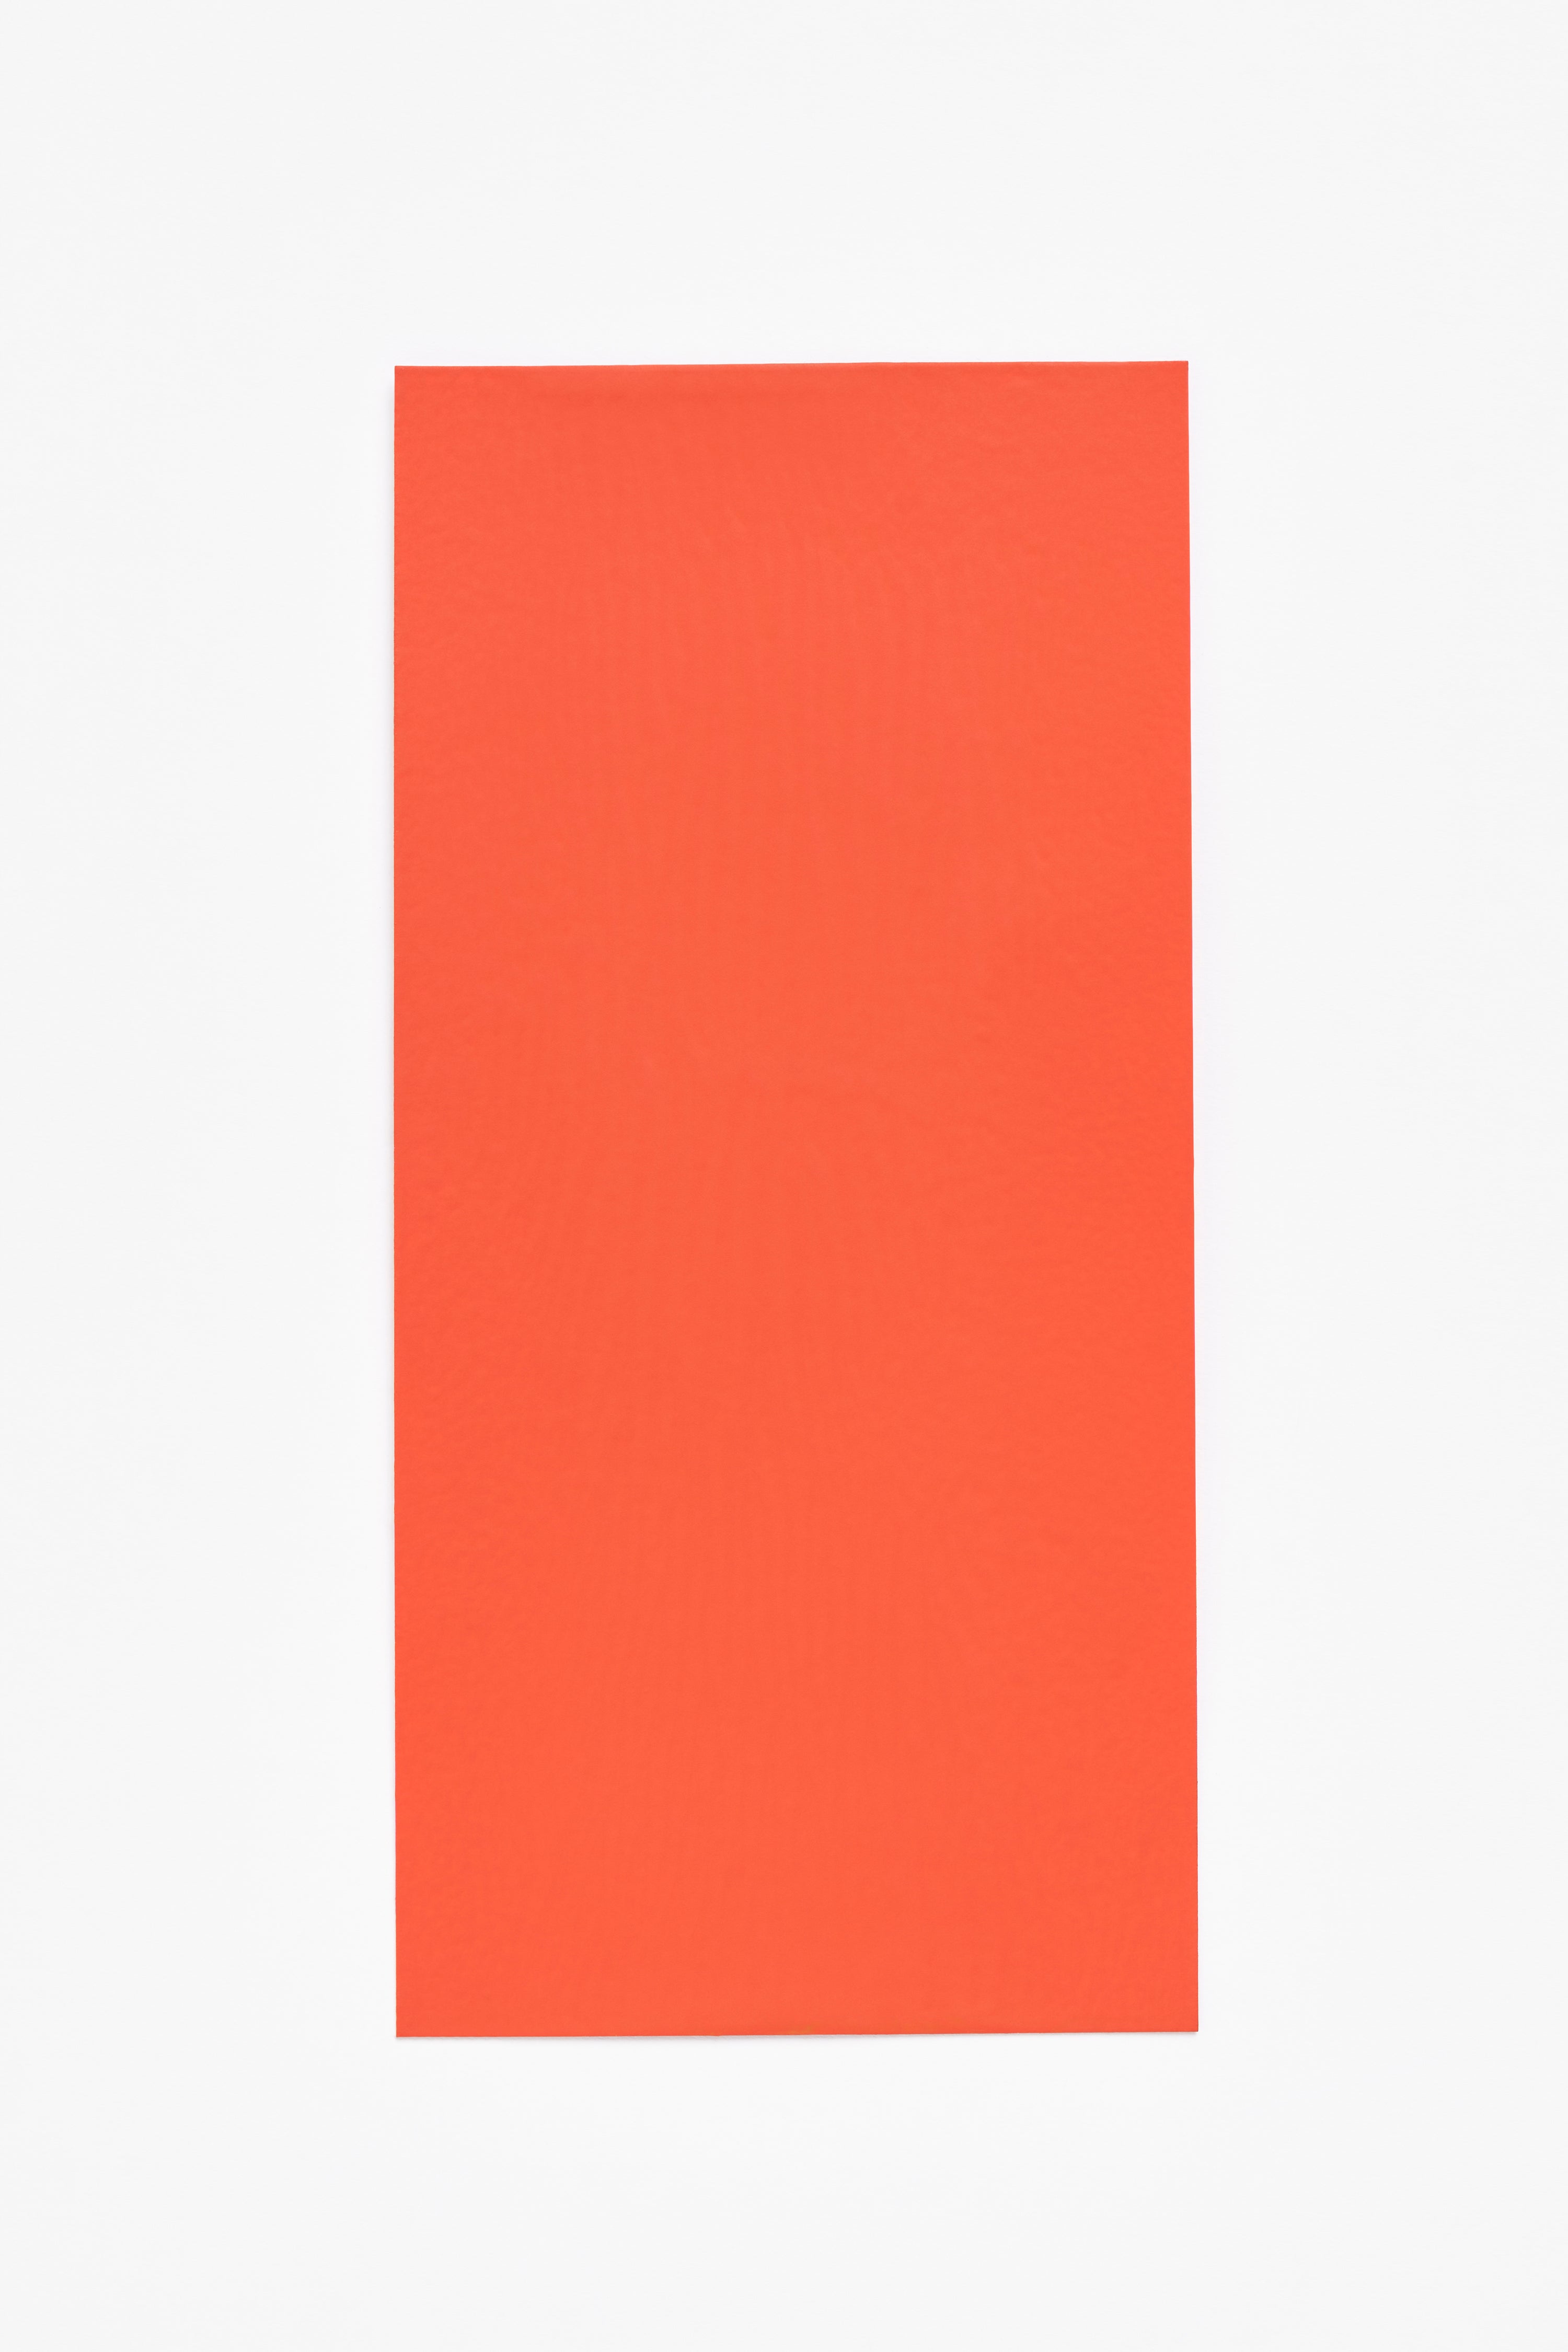 Coral — a paint colour developed by David Thulstrup for Blēo